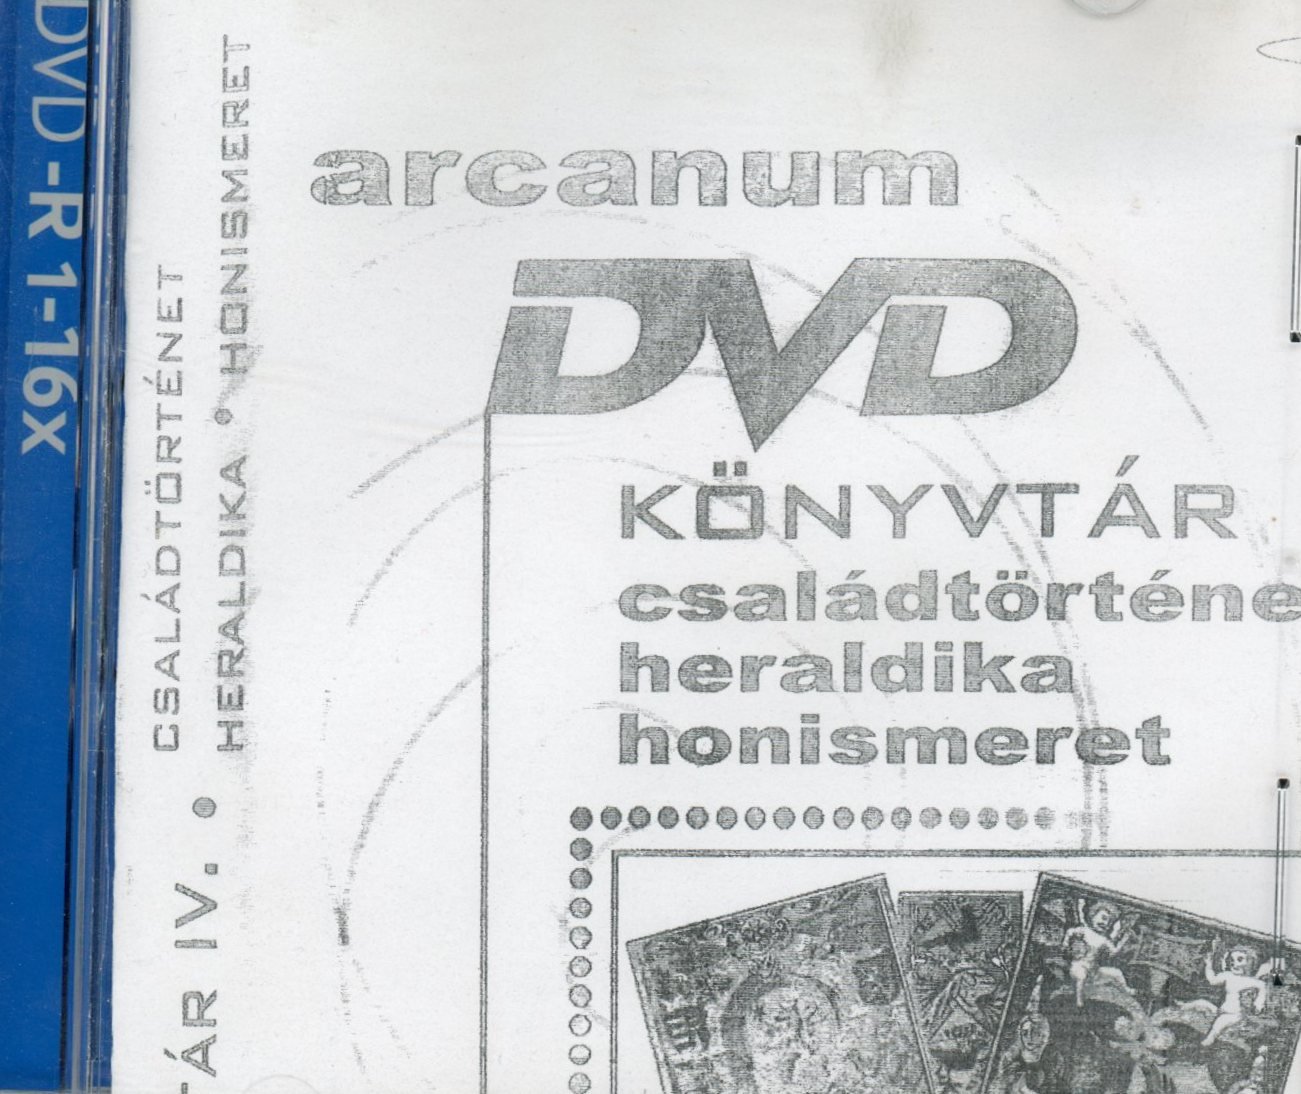 DVD 1db (Erkel Ferenc Múzeum CC BY-NC-SA)